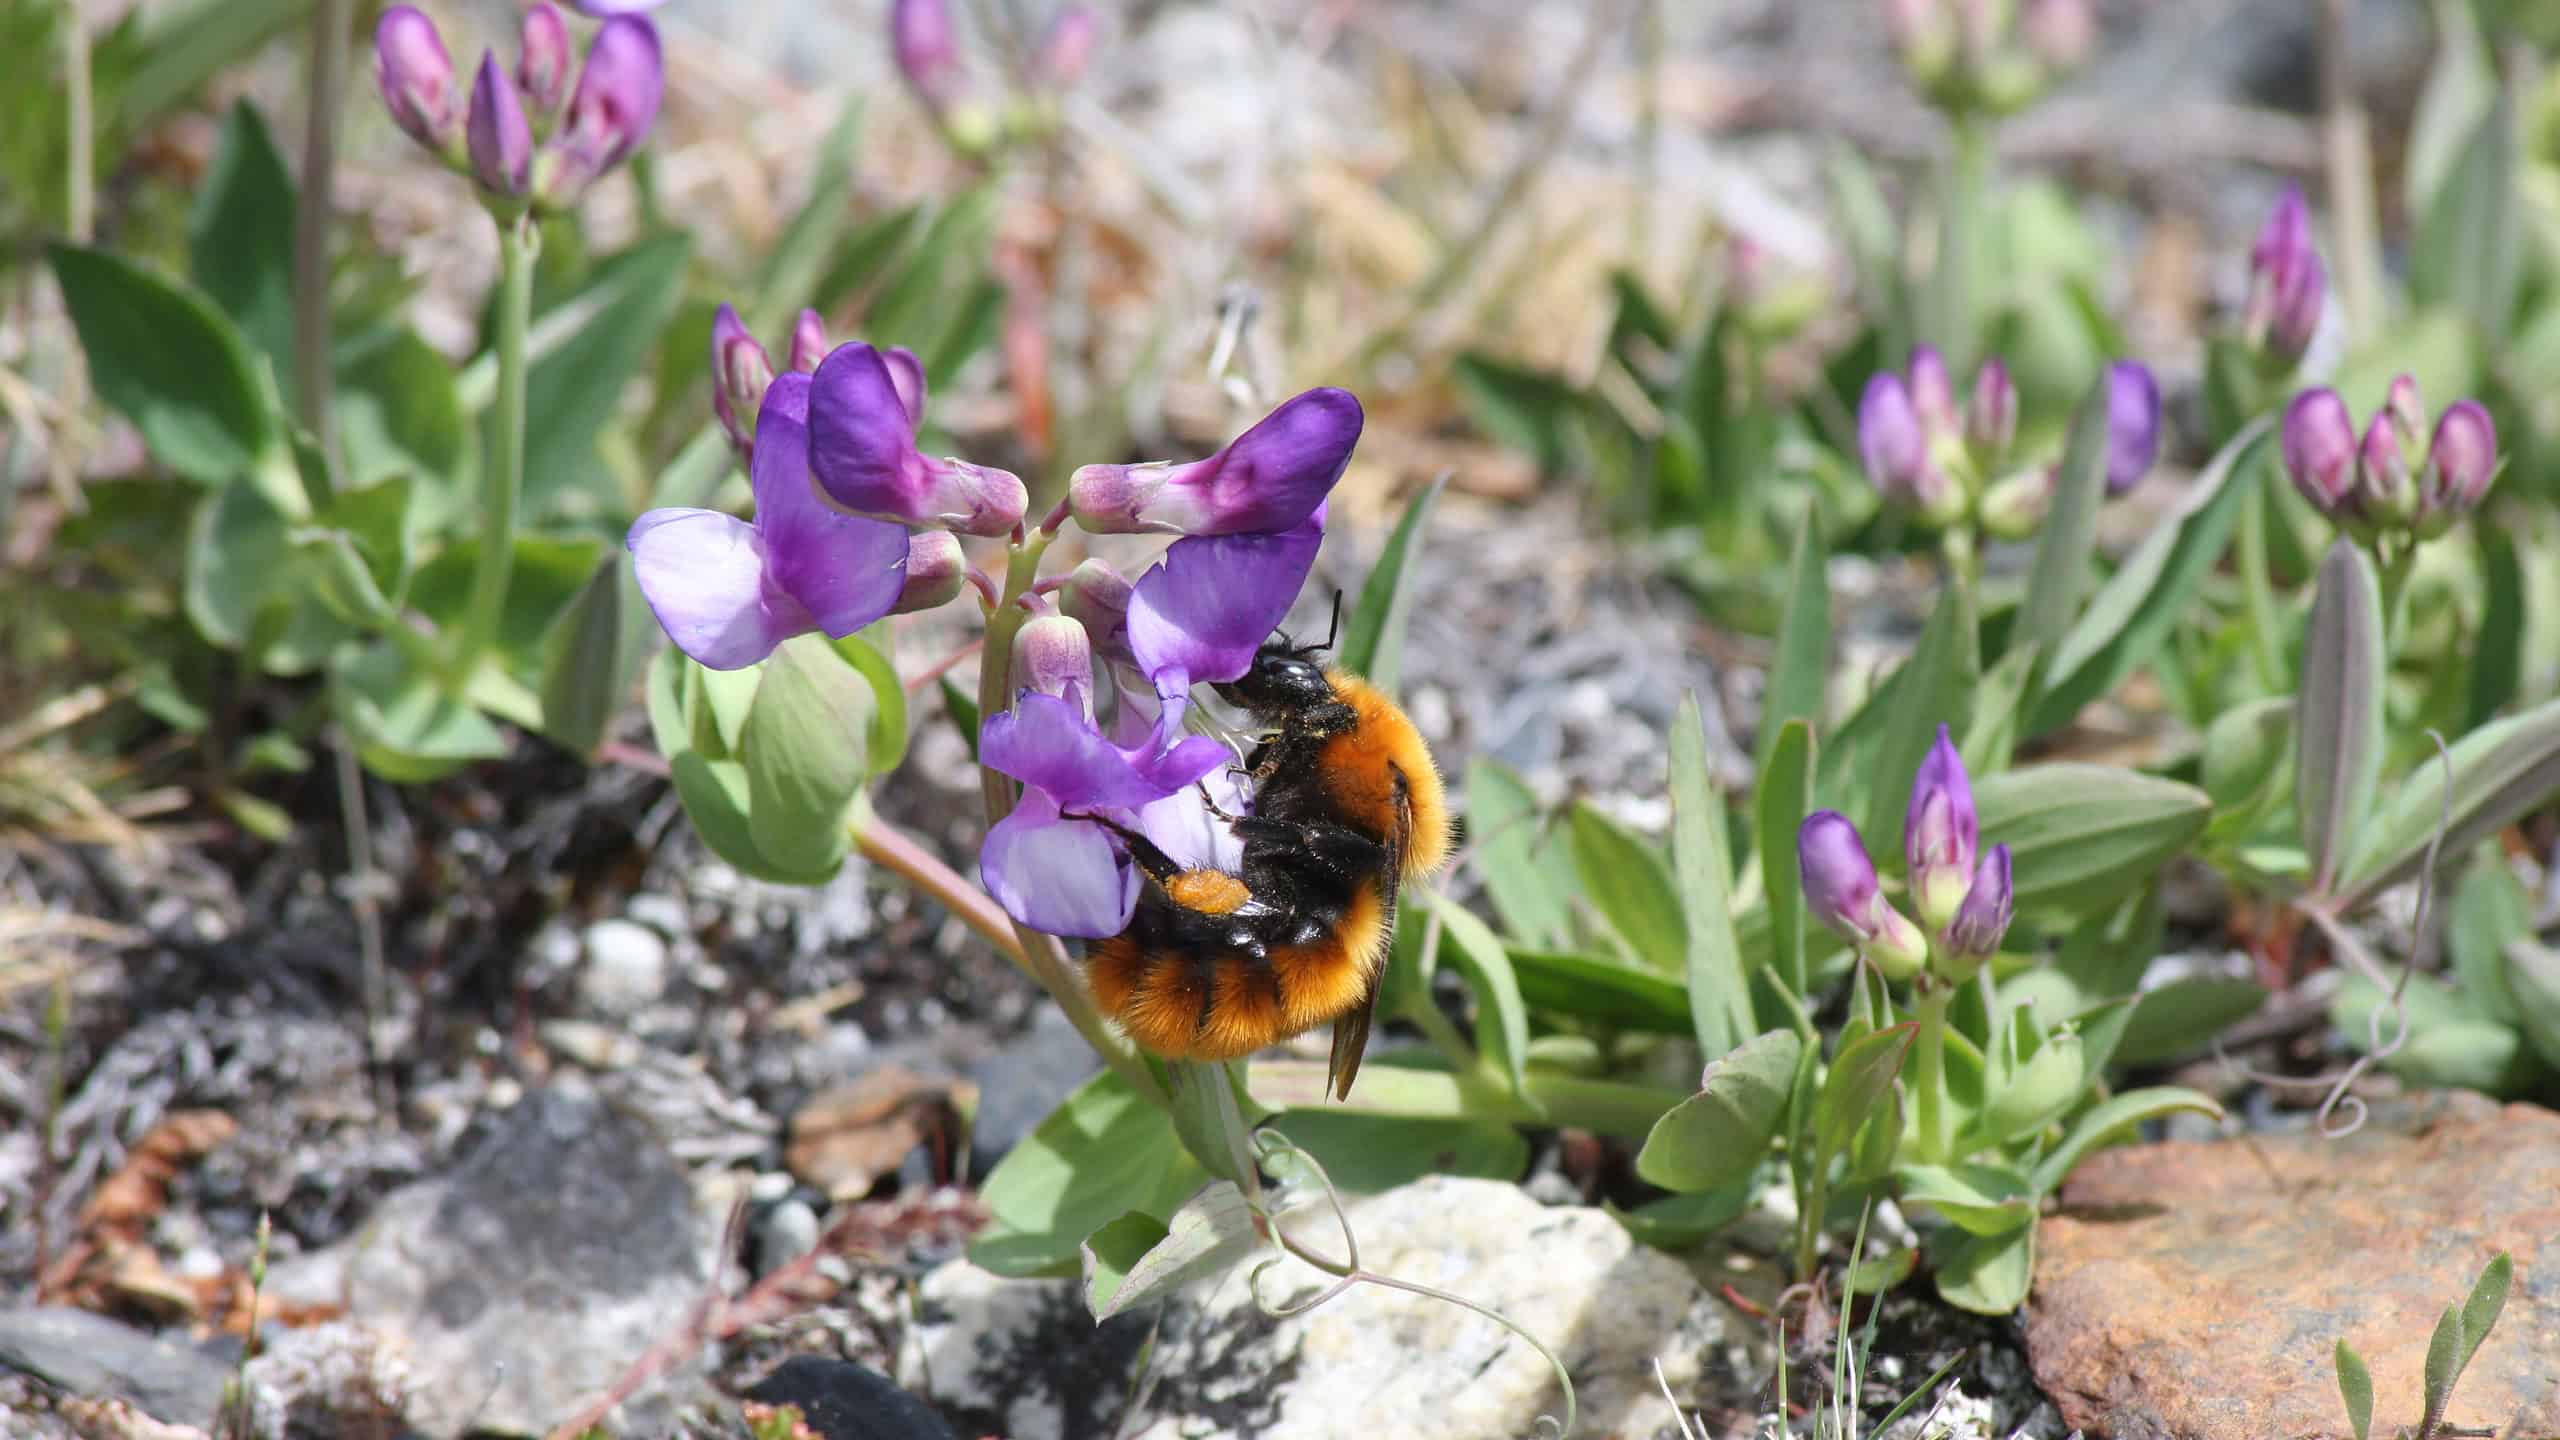 Huge Bombus dahlbomii species of bumblebee on a purple flower